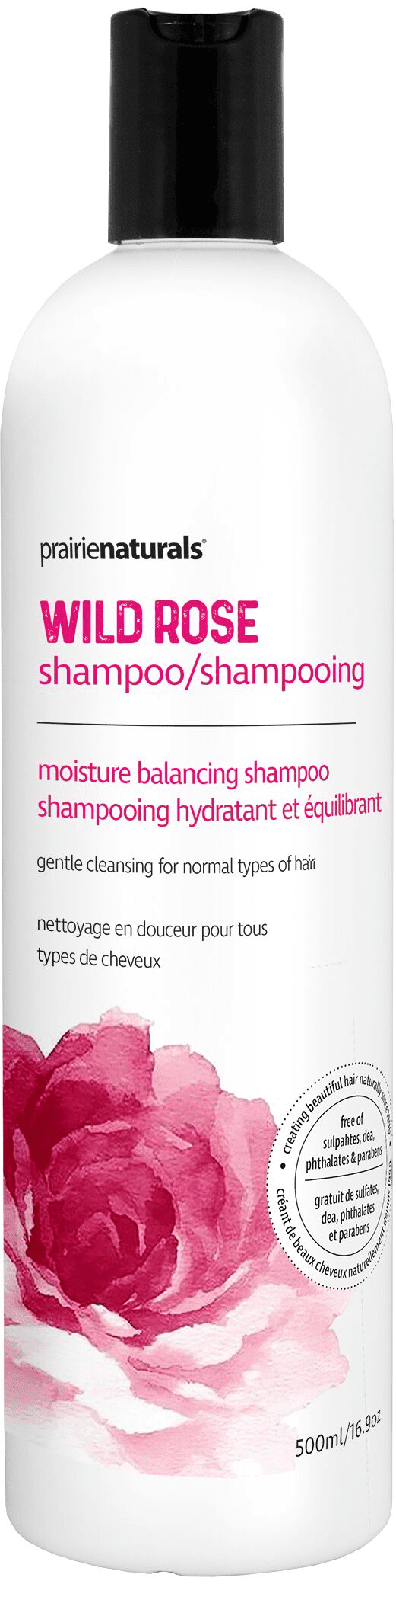 Prairie Naturals Wild Rose Moisture Balancing Shampoo 500 mL Image 2